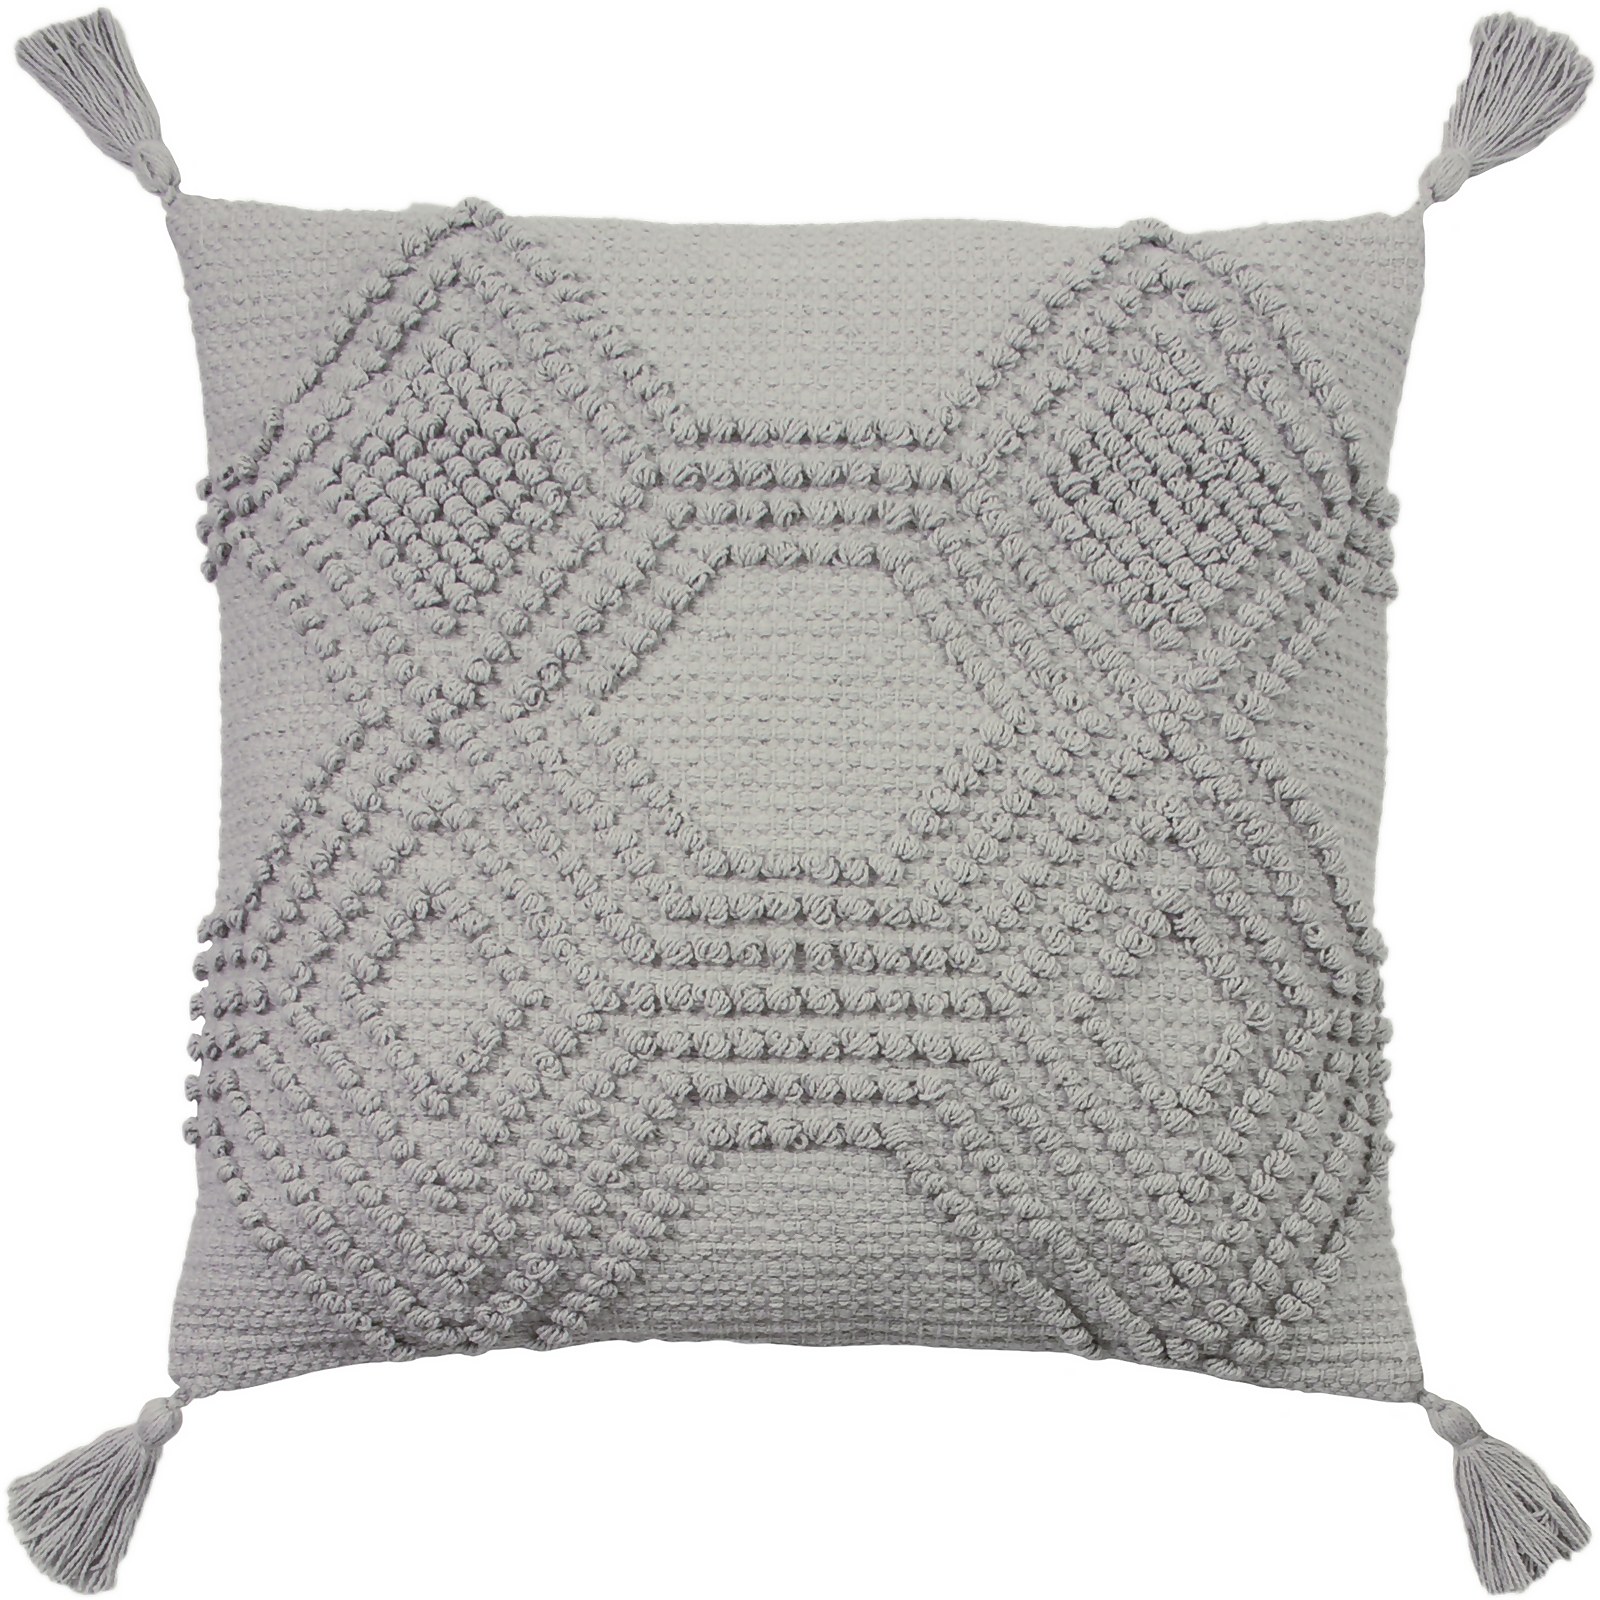 Photo of Knot Tassle Cushion - 45x45cm - Grey